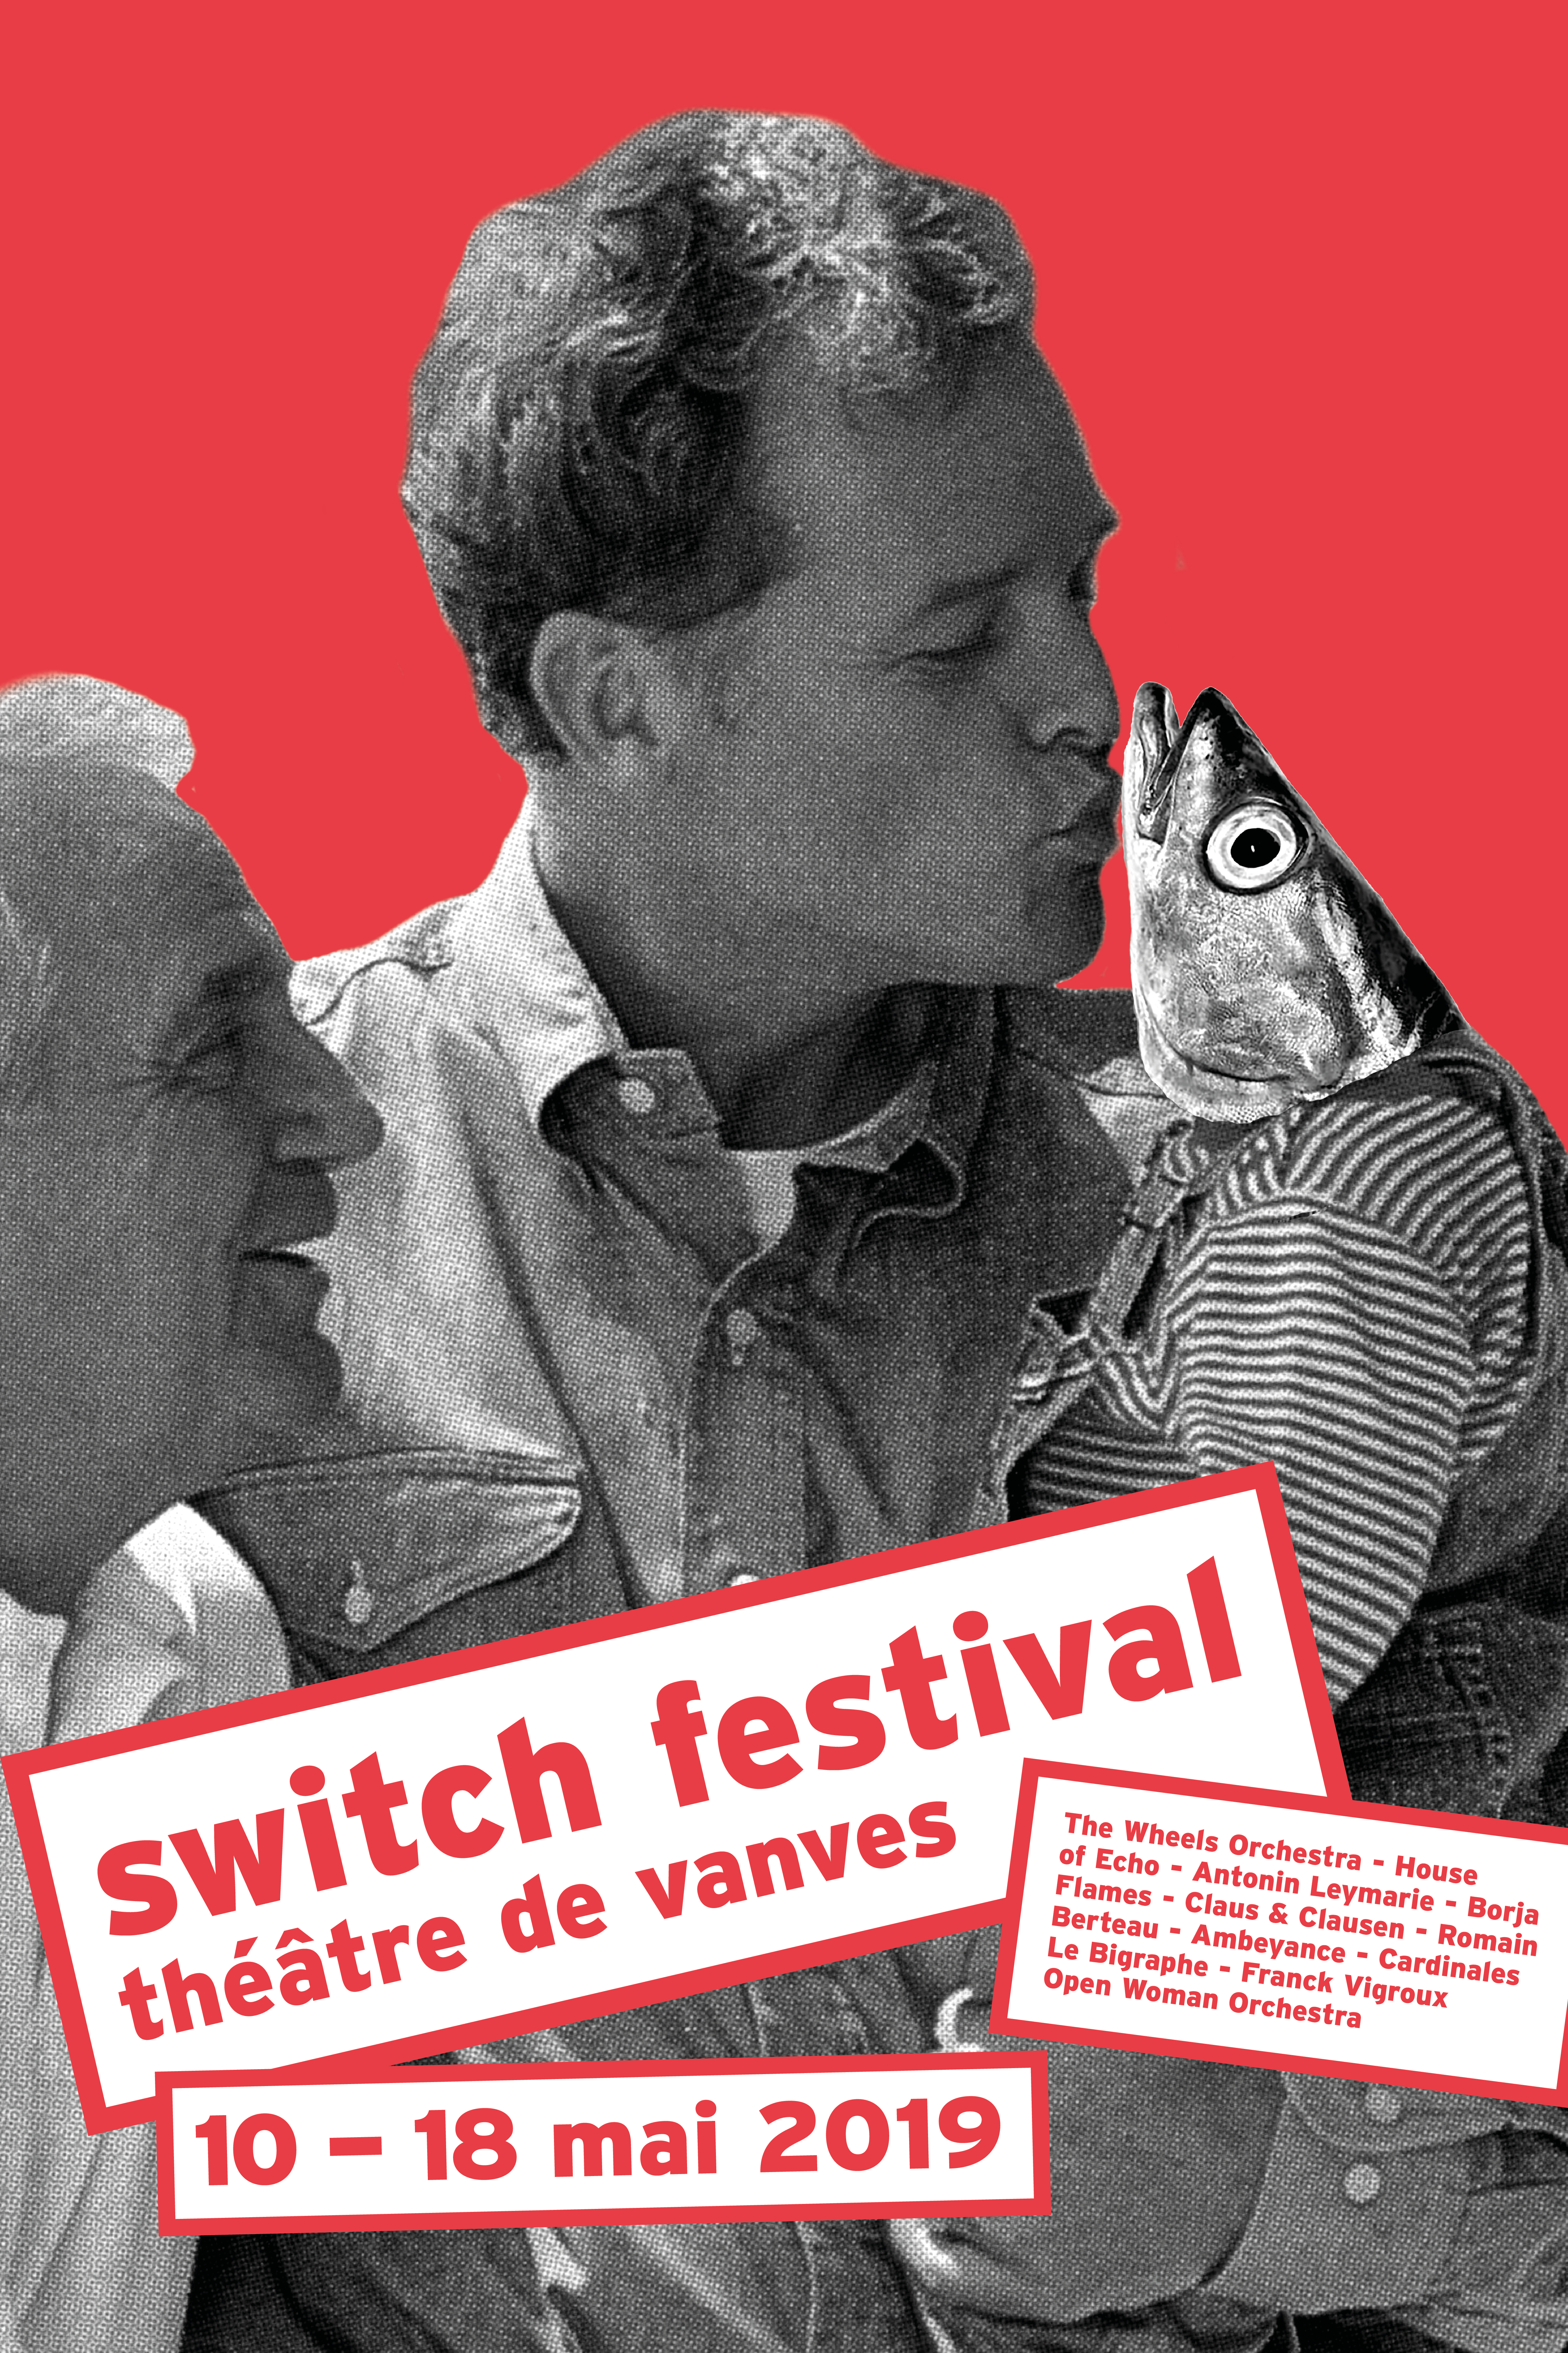 chloe huet switch festival affiche poster vanves